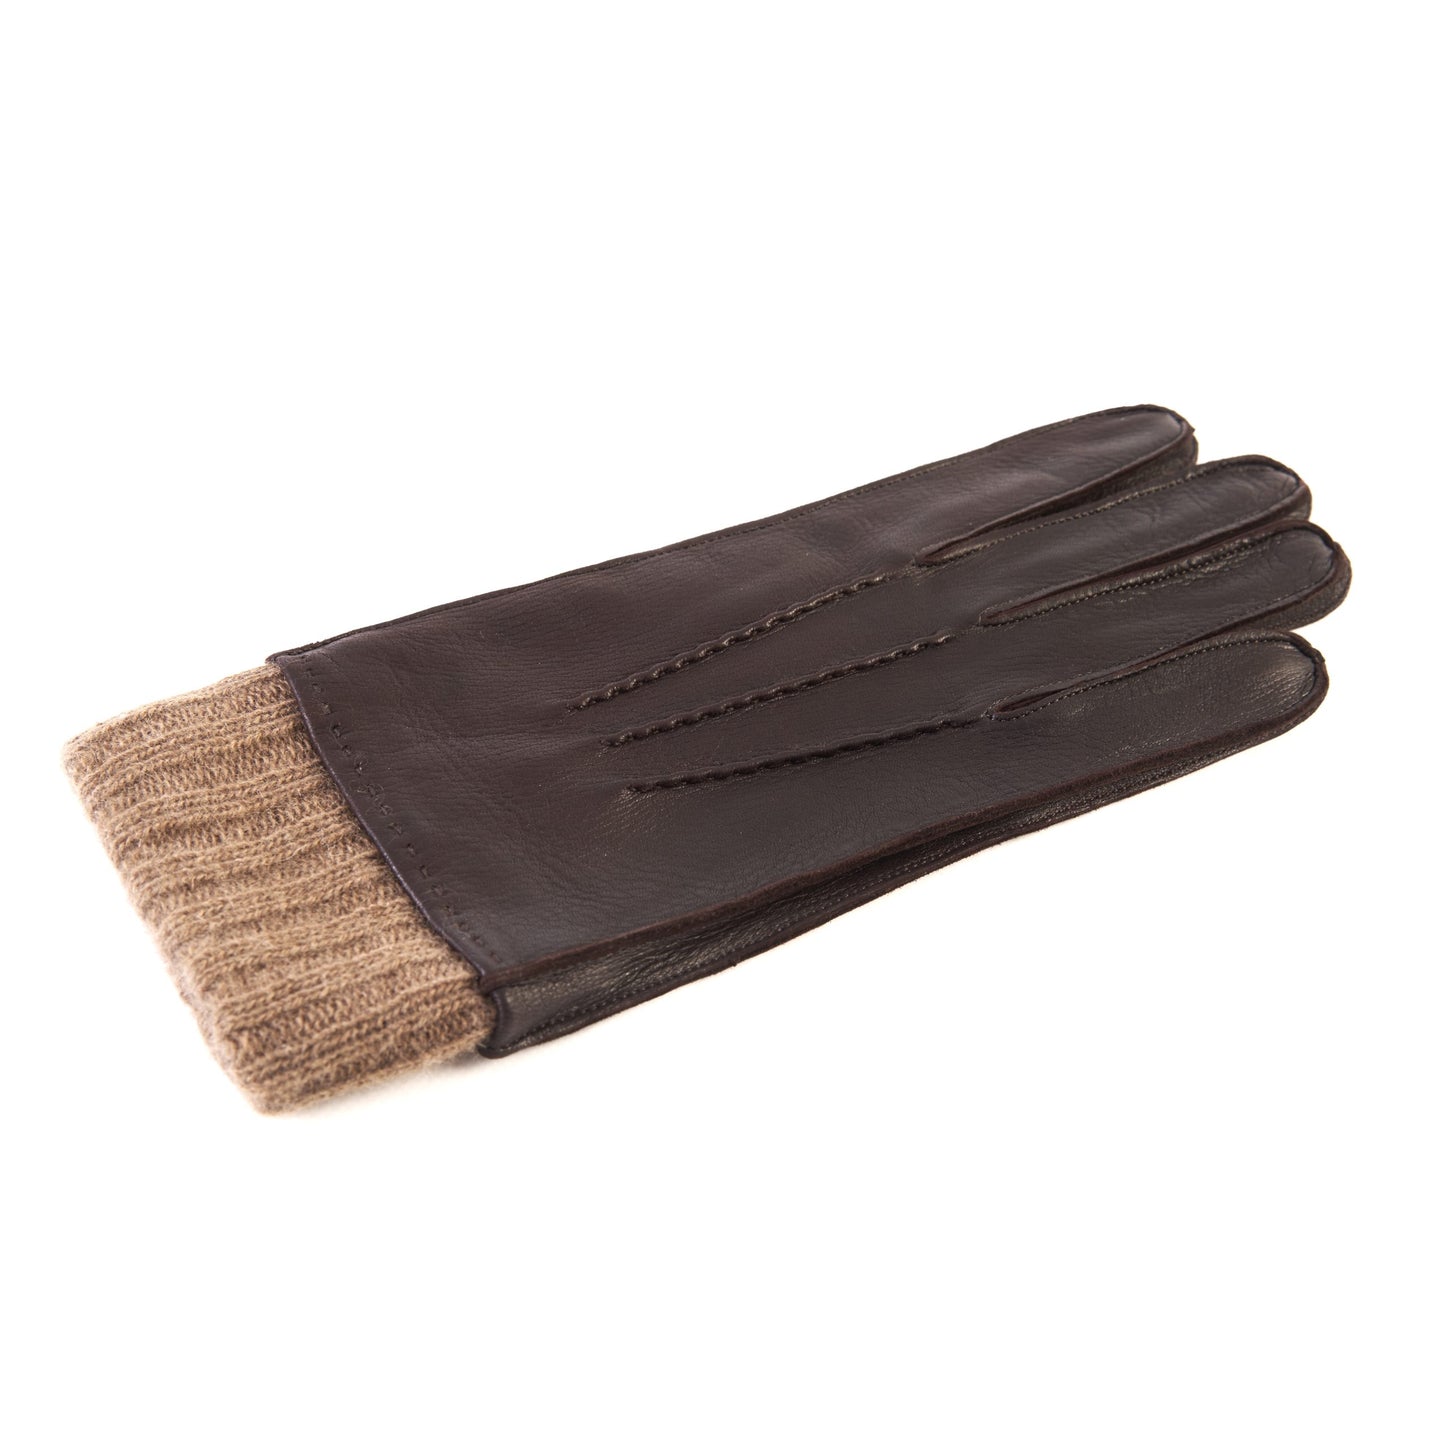 Men's brown deerskin gloves with beige cashmere lining with cuff